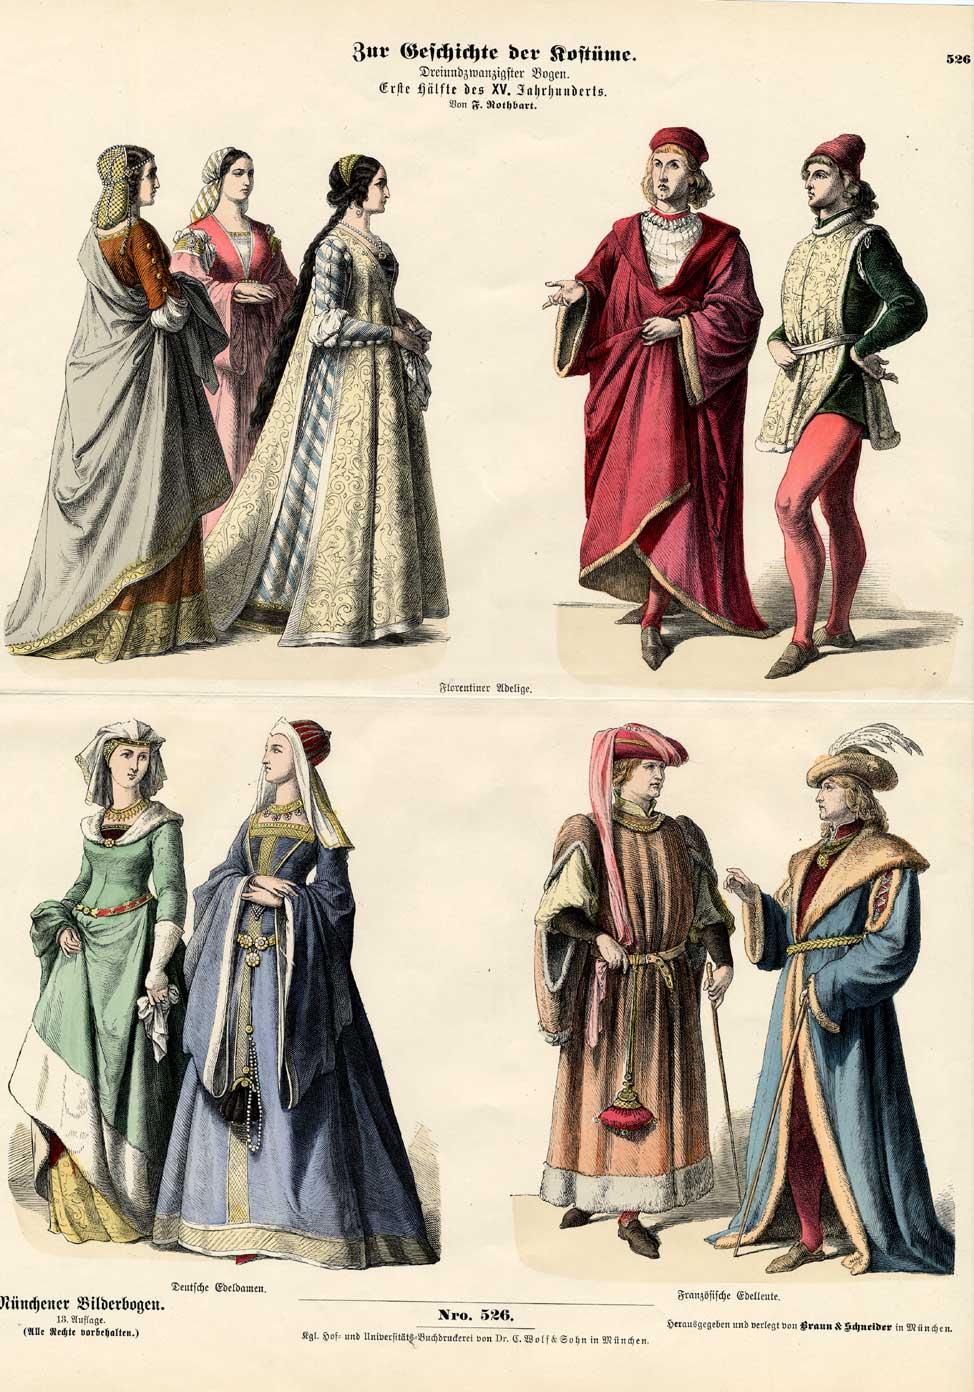 Одежда эпохи средневековья. Раннее средневековье романский стиль мода. Романский стиль в одежде средневековья. Романский стиль в костюме раннего средневековья. Костюм раннего средневековья романский период.